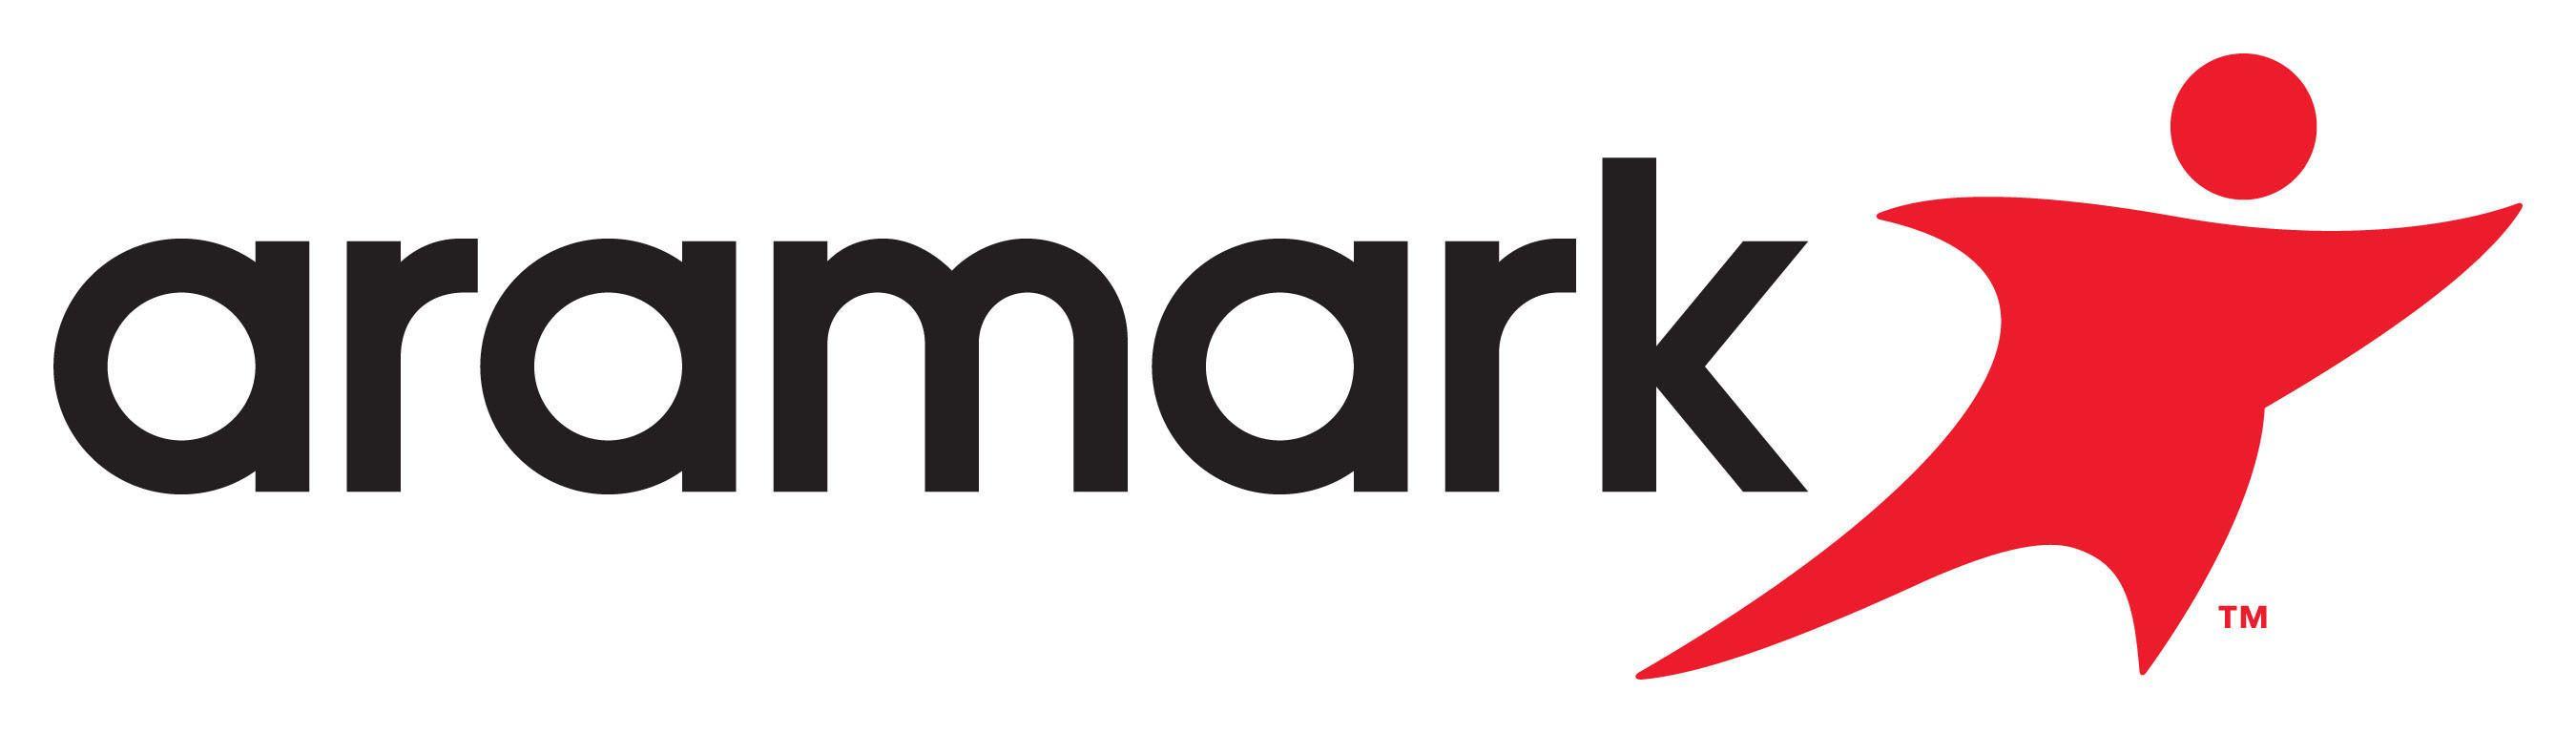 Aramark.com Logo - ARAMARK LOGO